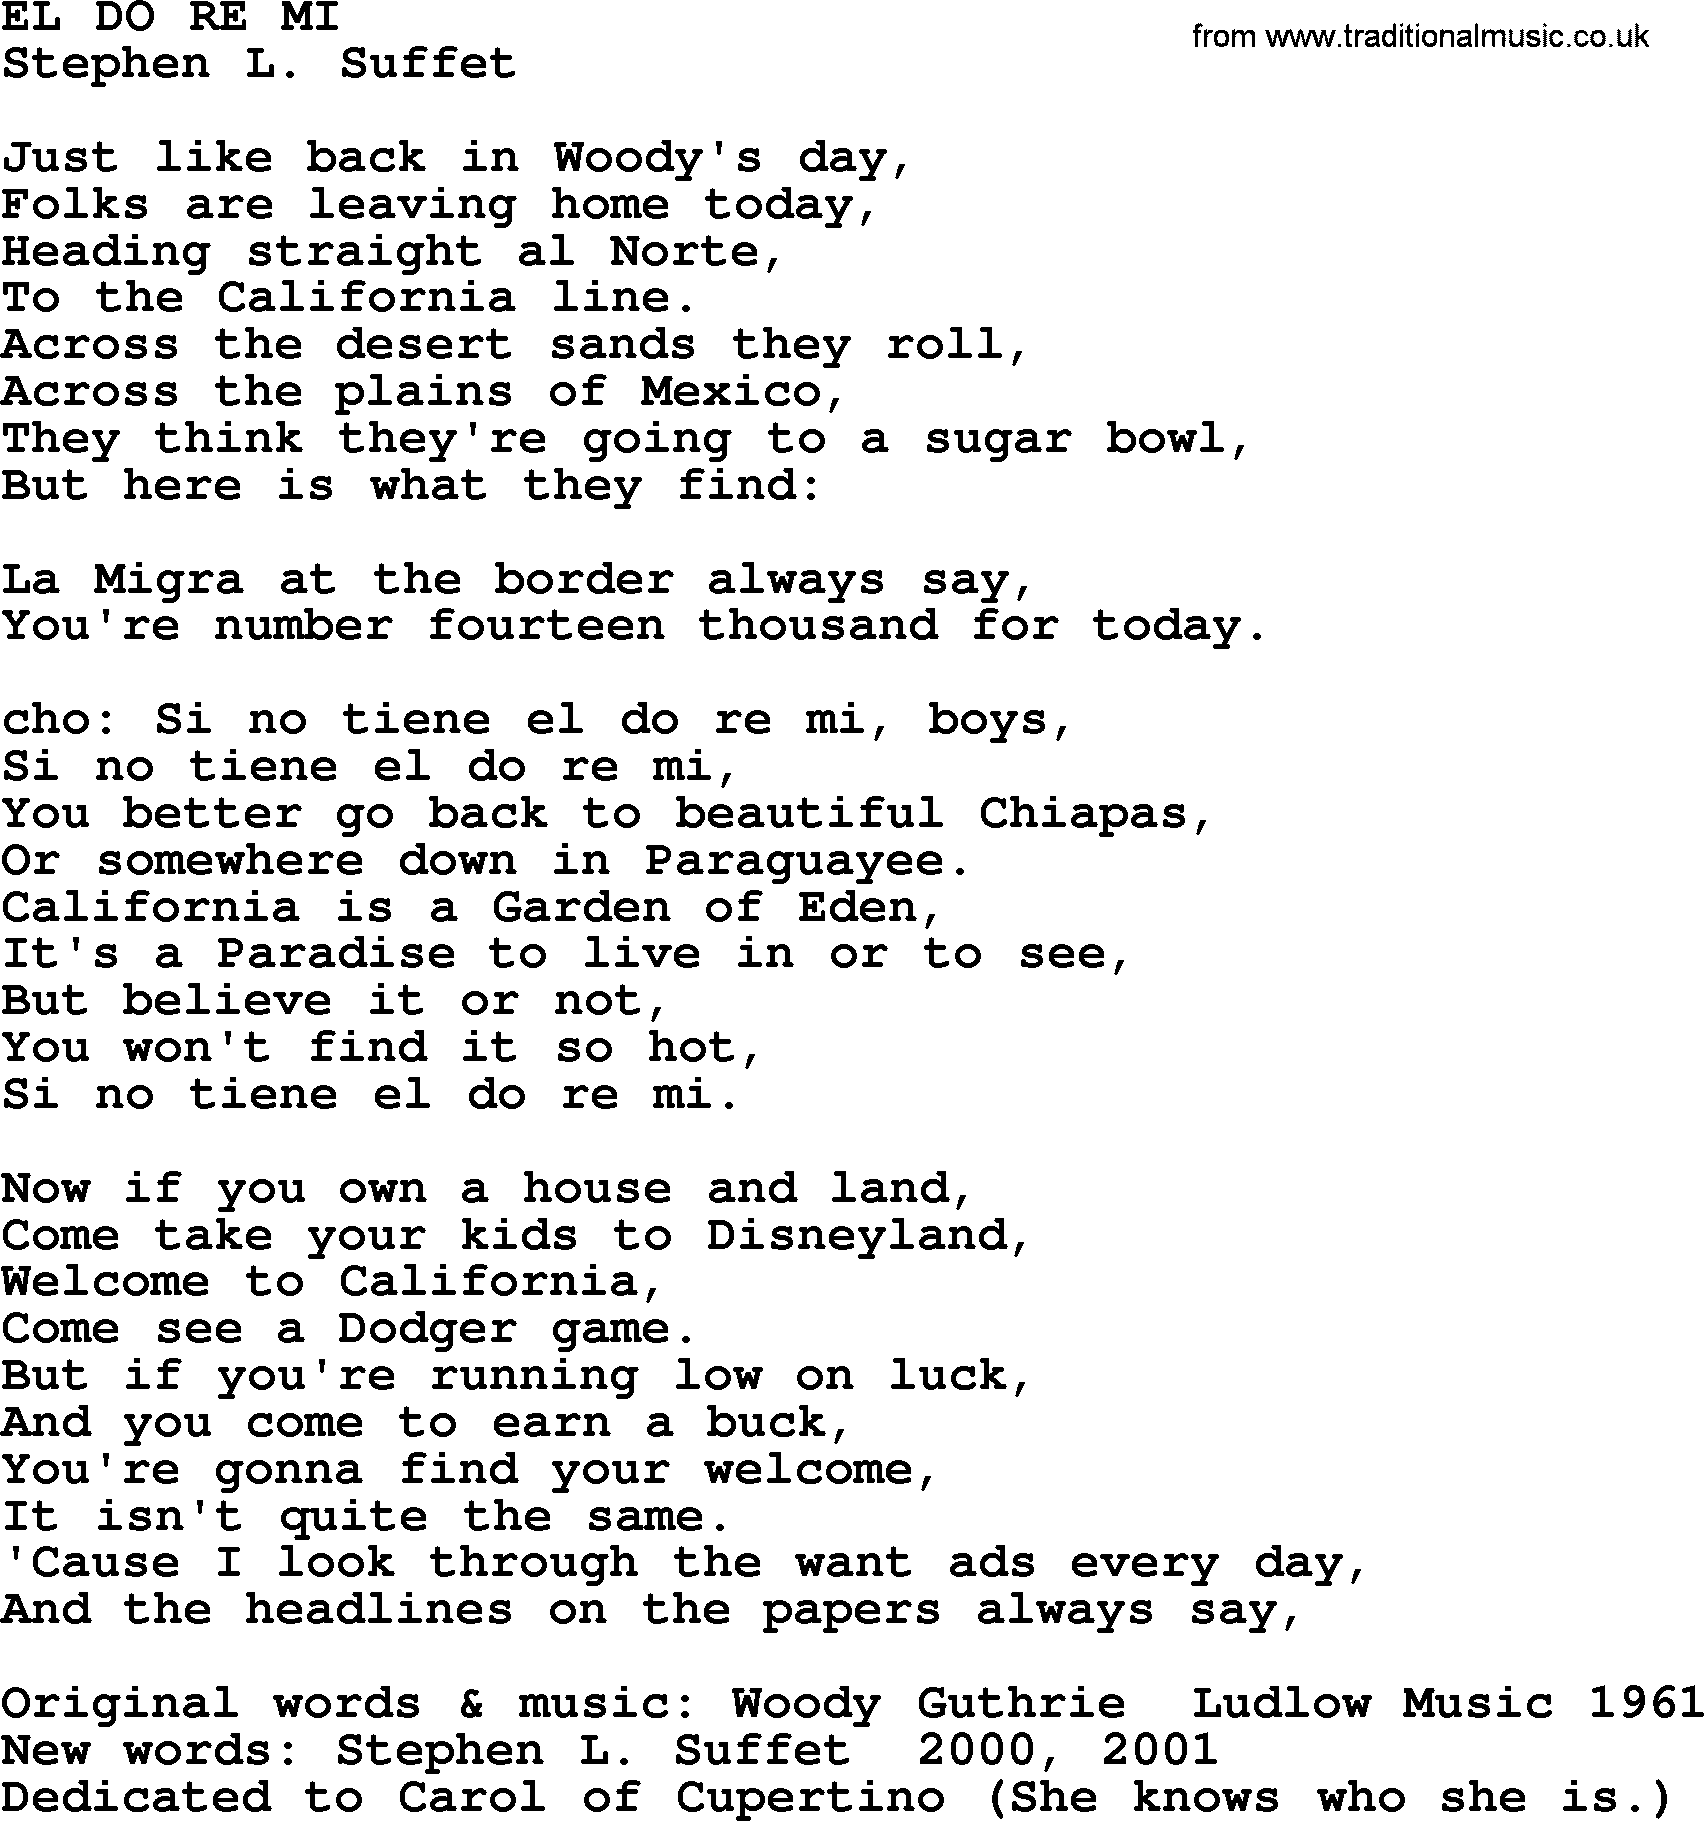 Woody Guthrie song El Do Re Mi lyrics